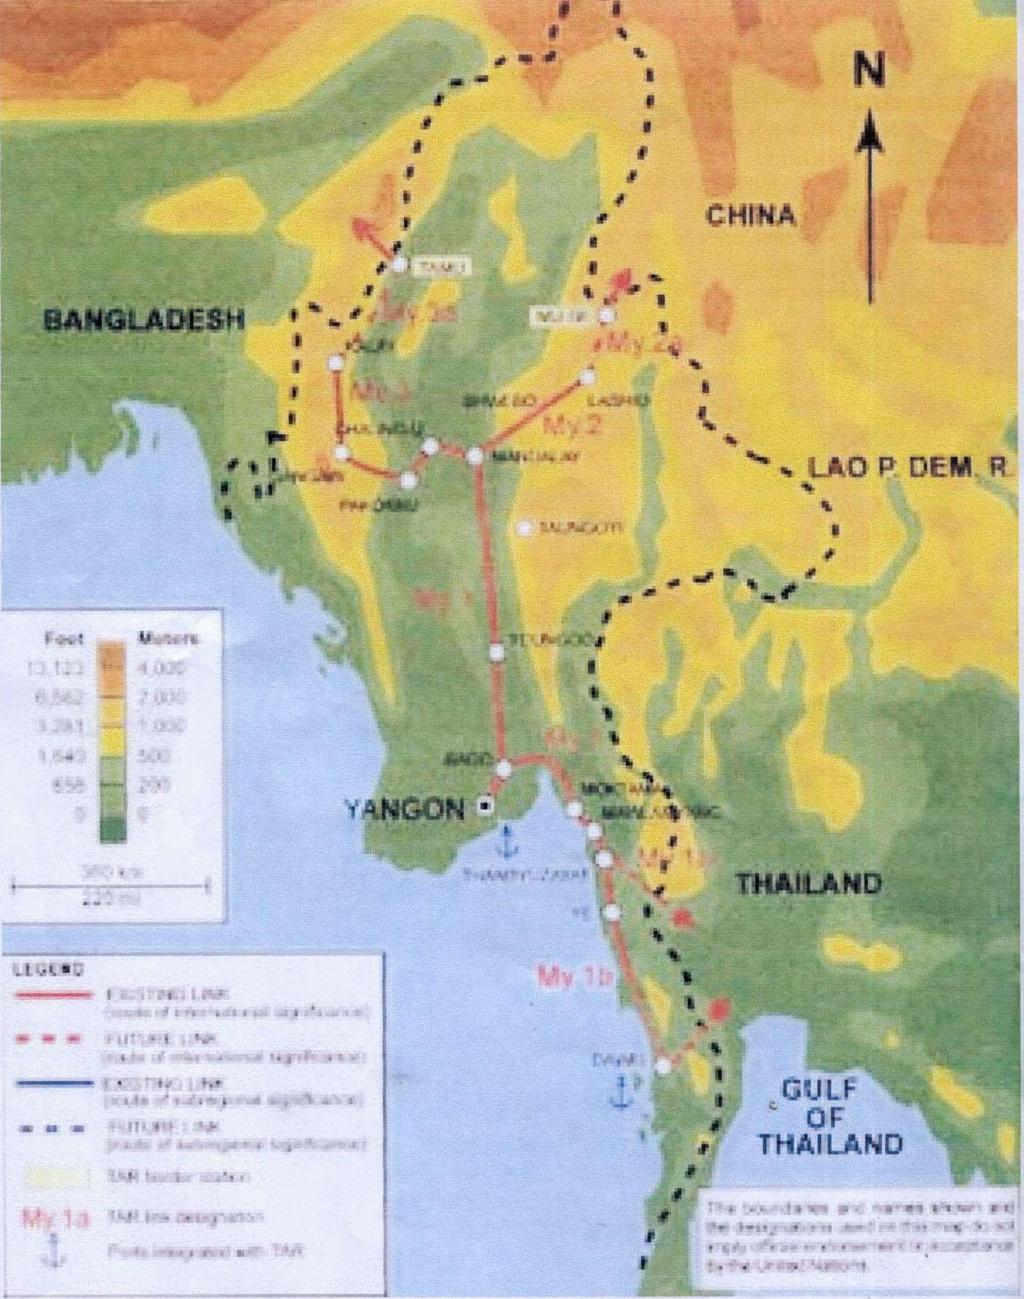 Railway Lines of International Importance in Myanmar Existing lines Mandalay-Yangon = 617 km Mandalay-Lashio = 313 km Mandalay-Kalay = 539 km Bago-Thanbyuzayat-Dawei = 520